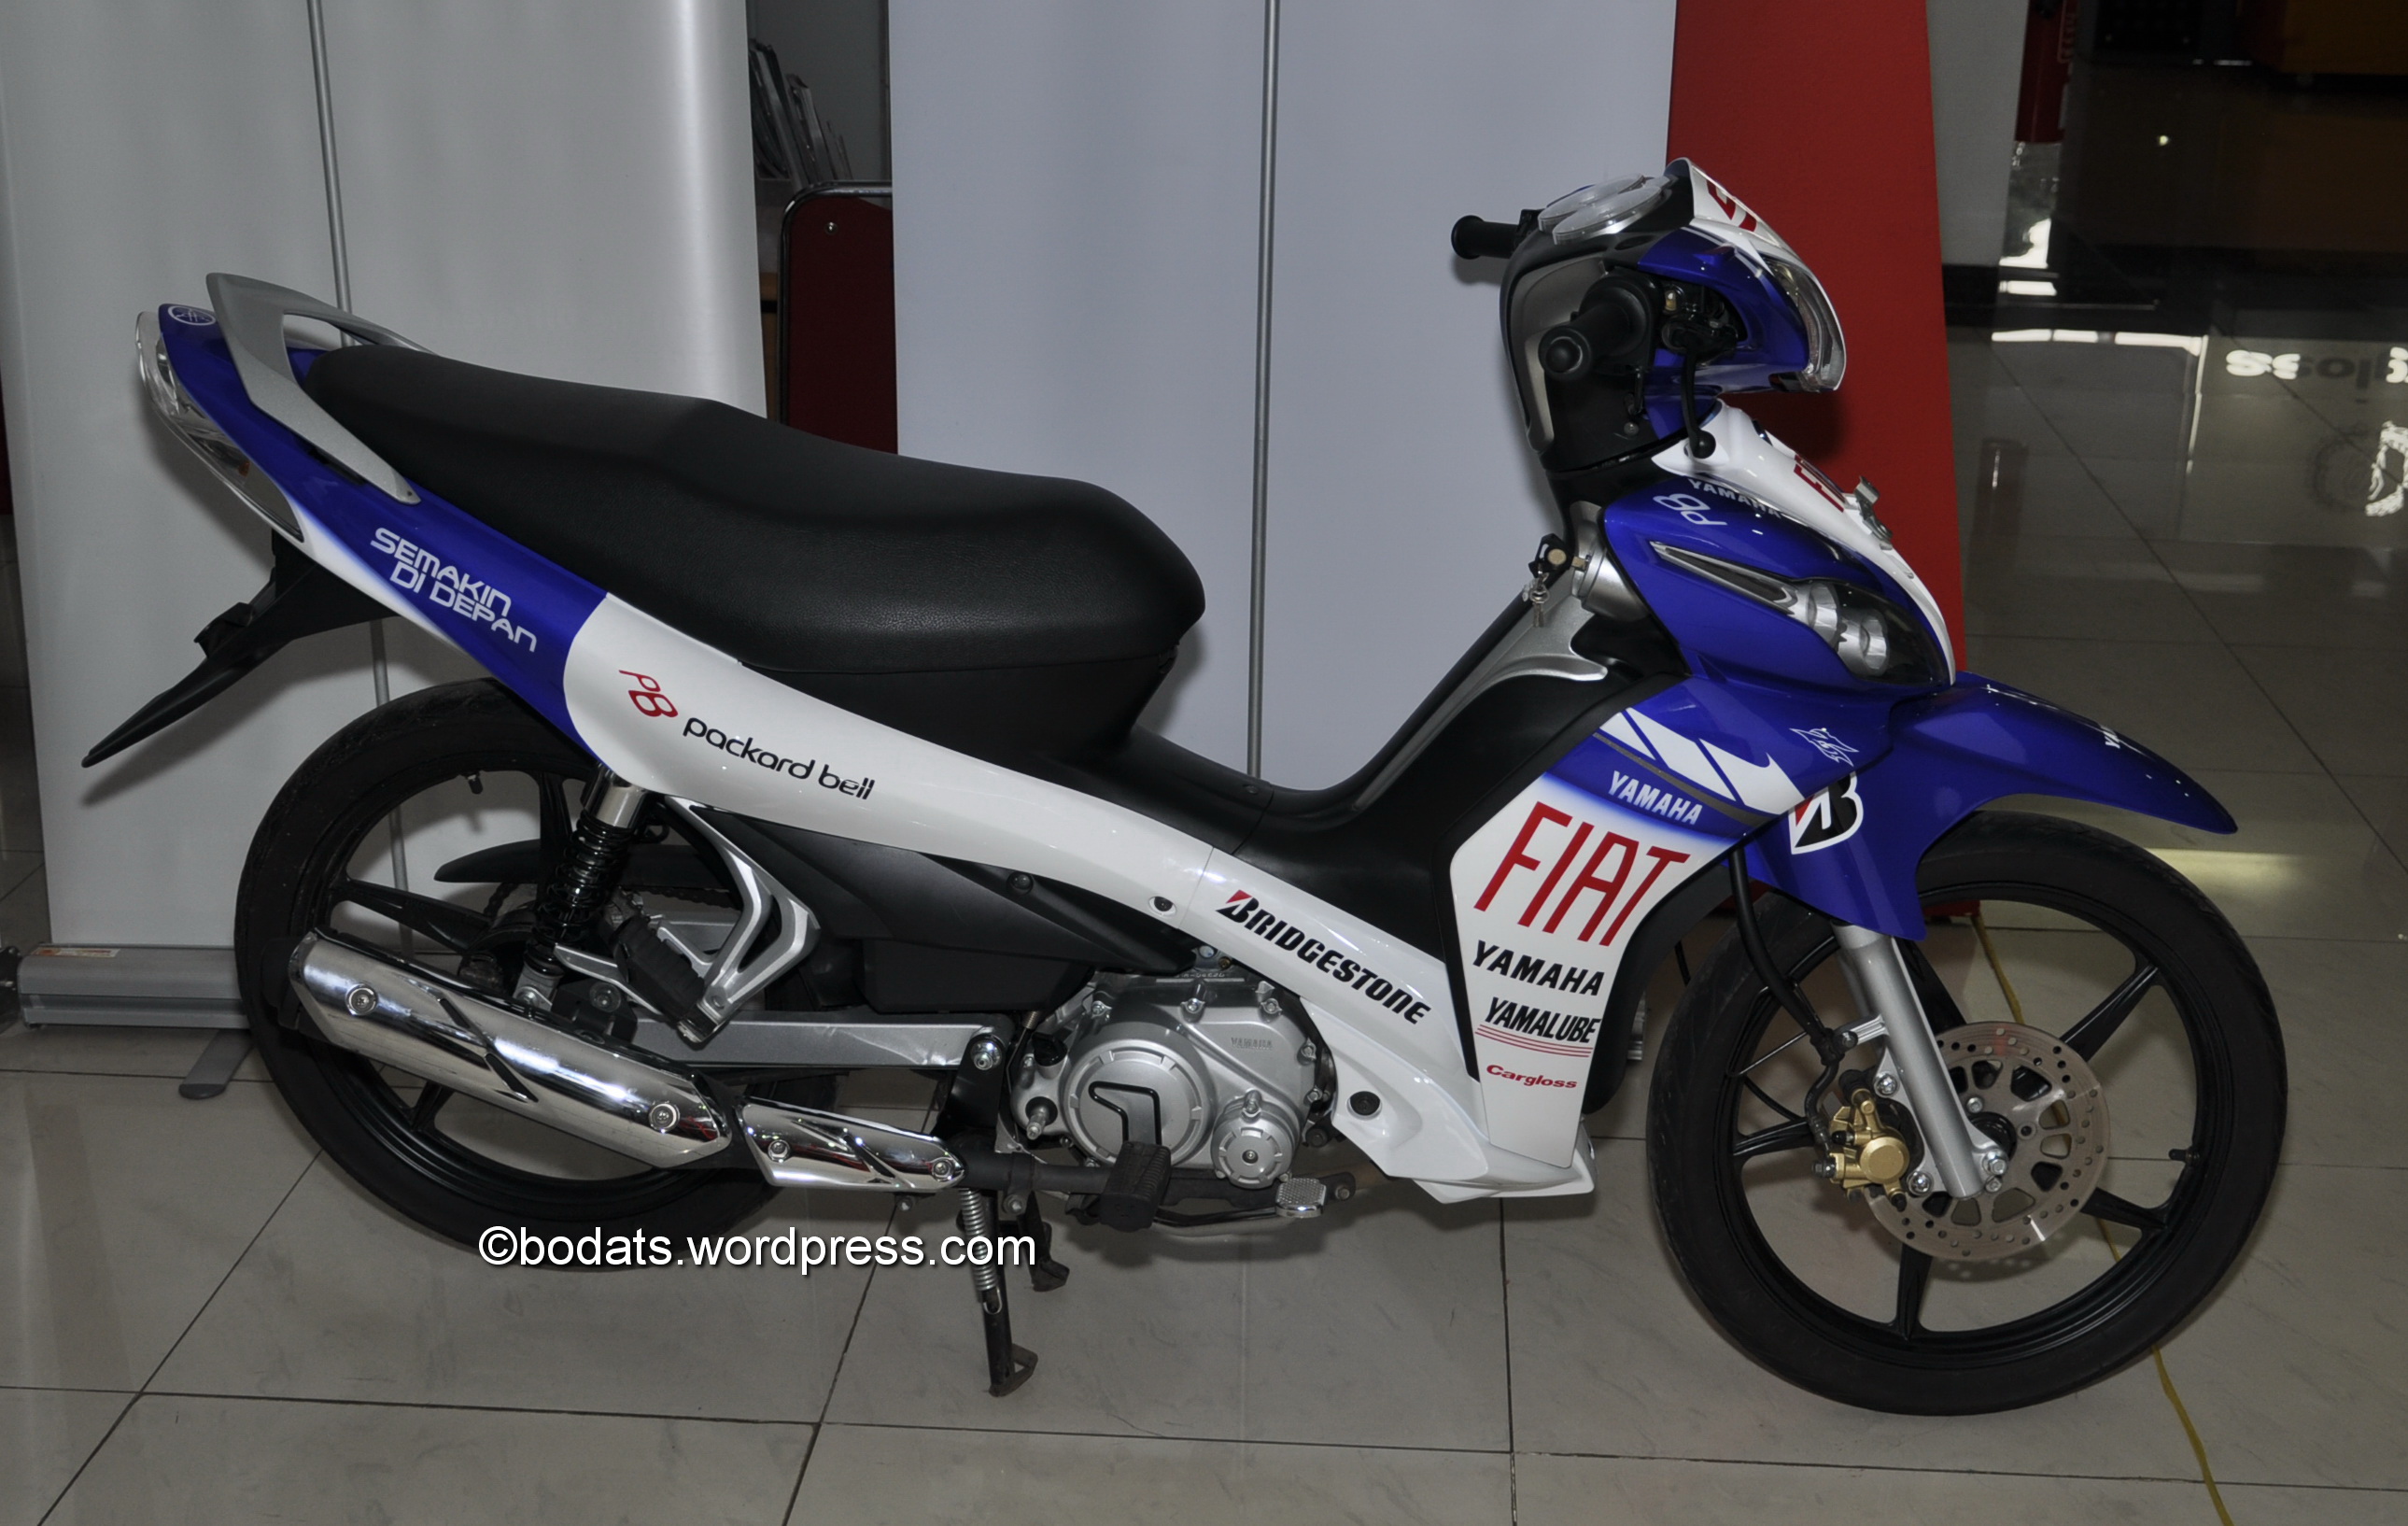 Foto Modifikasi Motor Yamaha Rx King